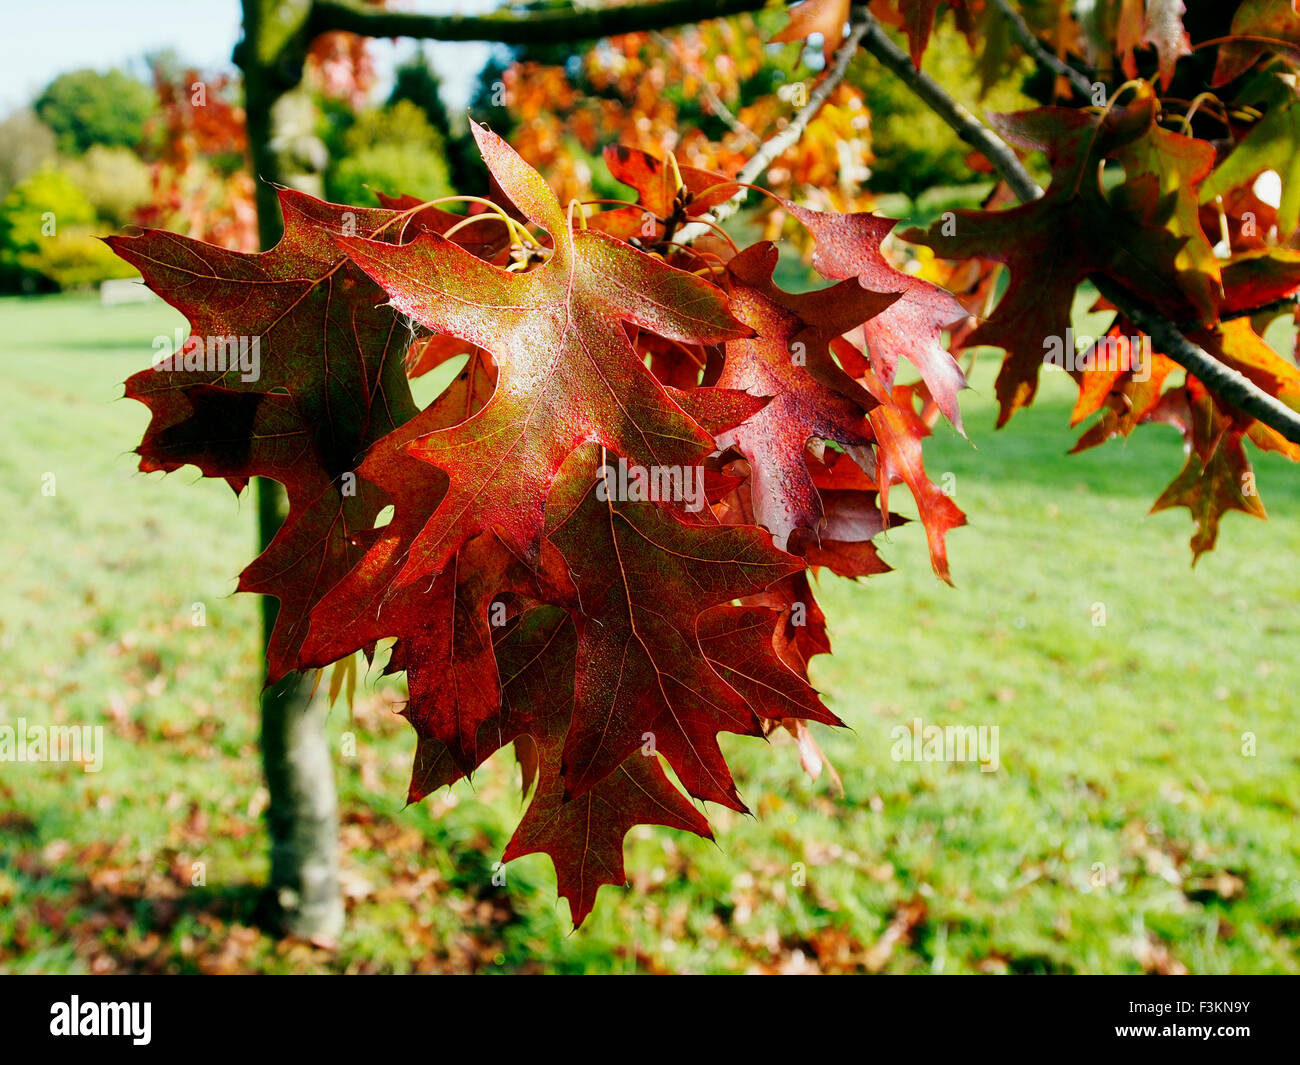 Quercus Palustris Pendel oder "Sumpf-Eiche", "Pin Oak" oder Sumpf spanische Eiche Blätter im Herbst. Stockfoto